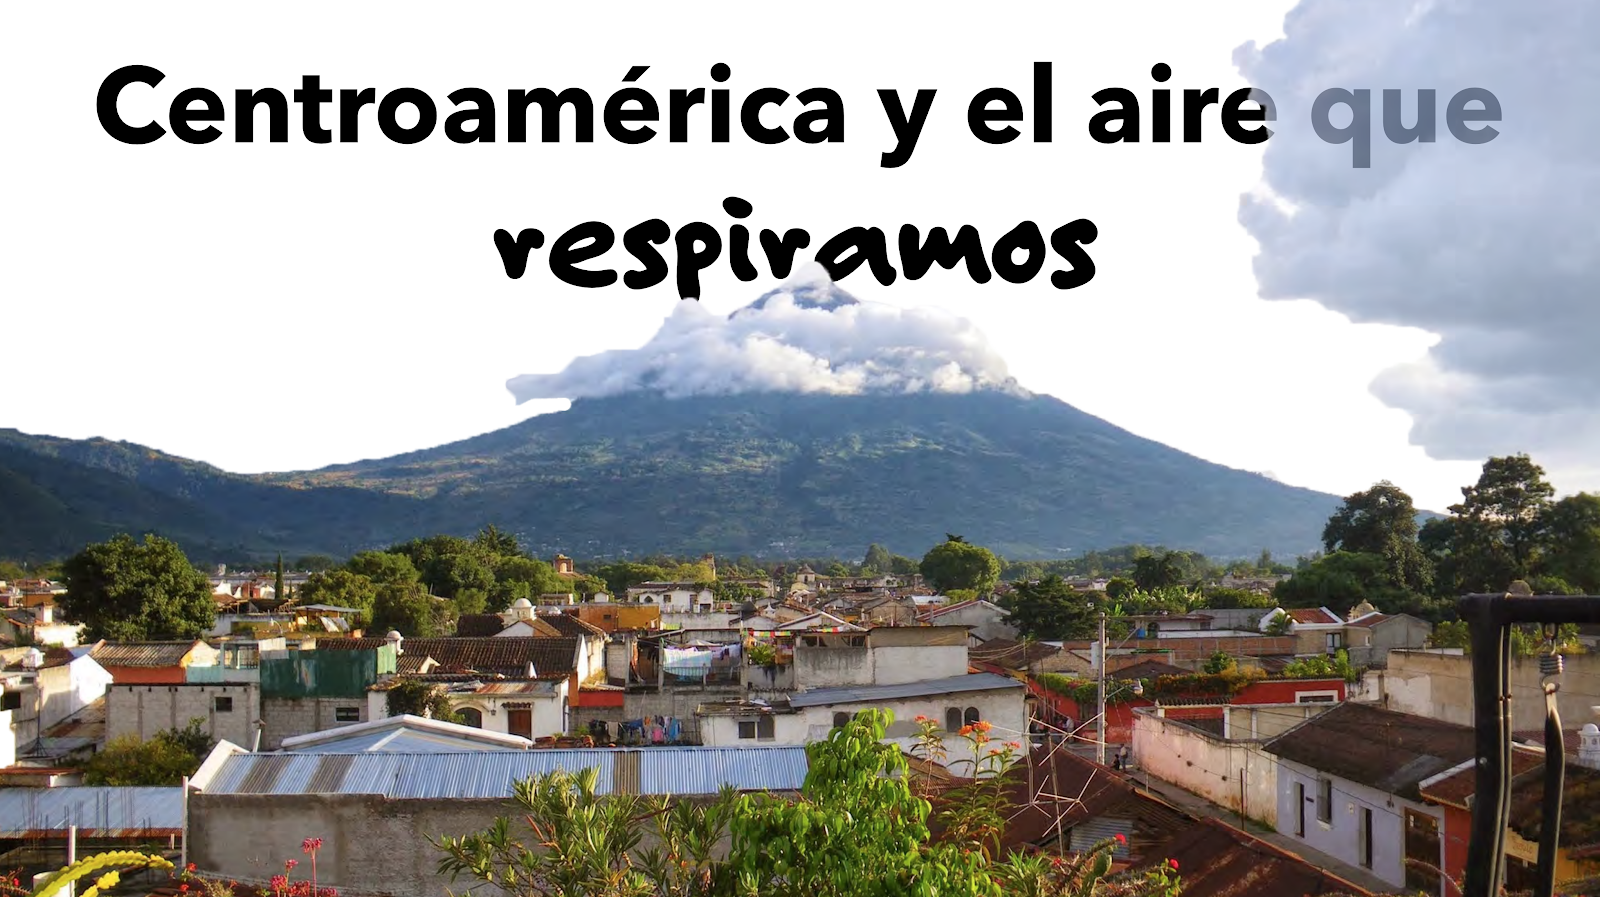 Spanish Lessons on Central America - Spanish Playground